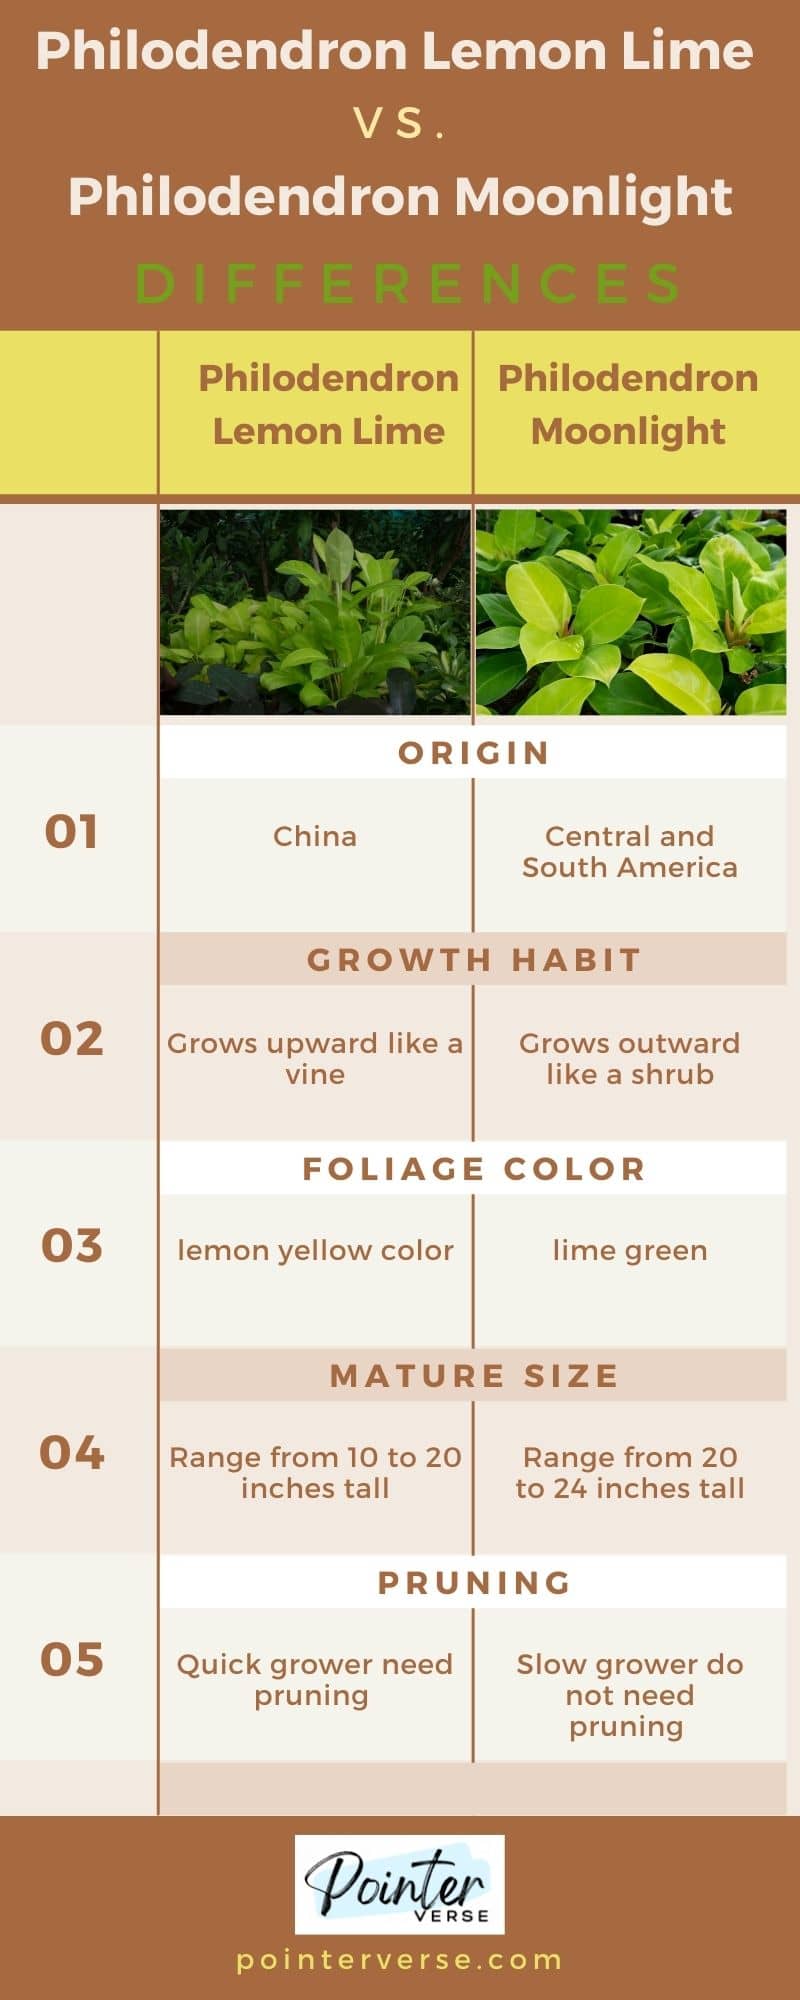 Philodendron Lemon Lime Vs. Moonlight infographic